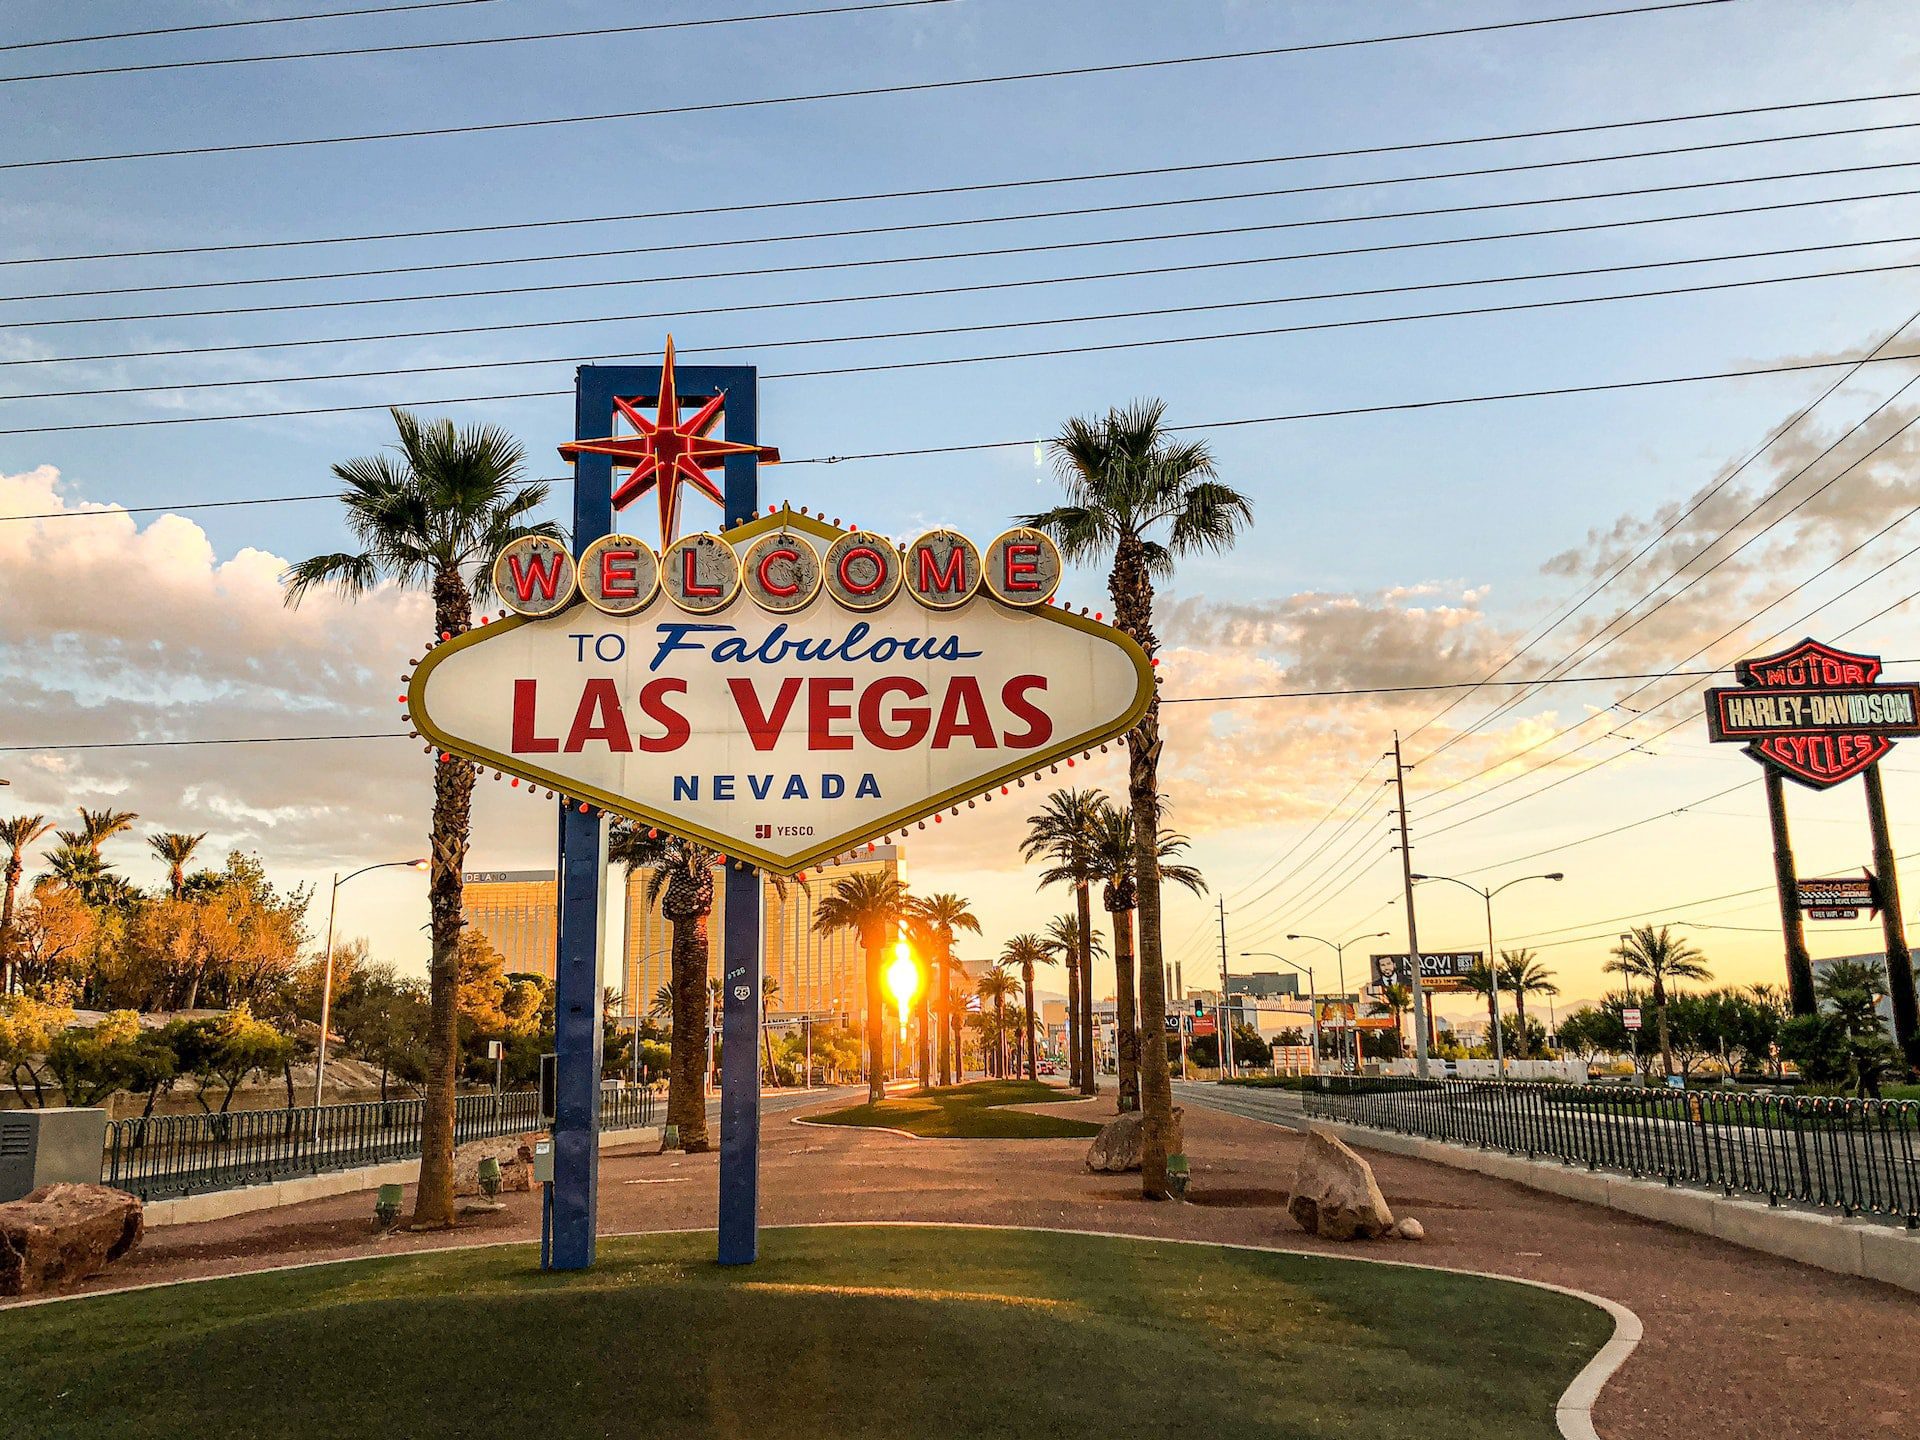 Las Vegas sign in Las Vegas, Nevada.